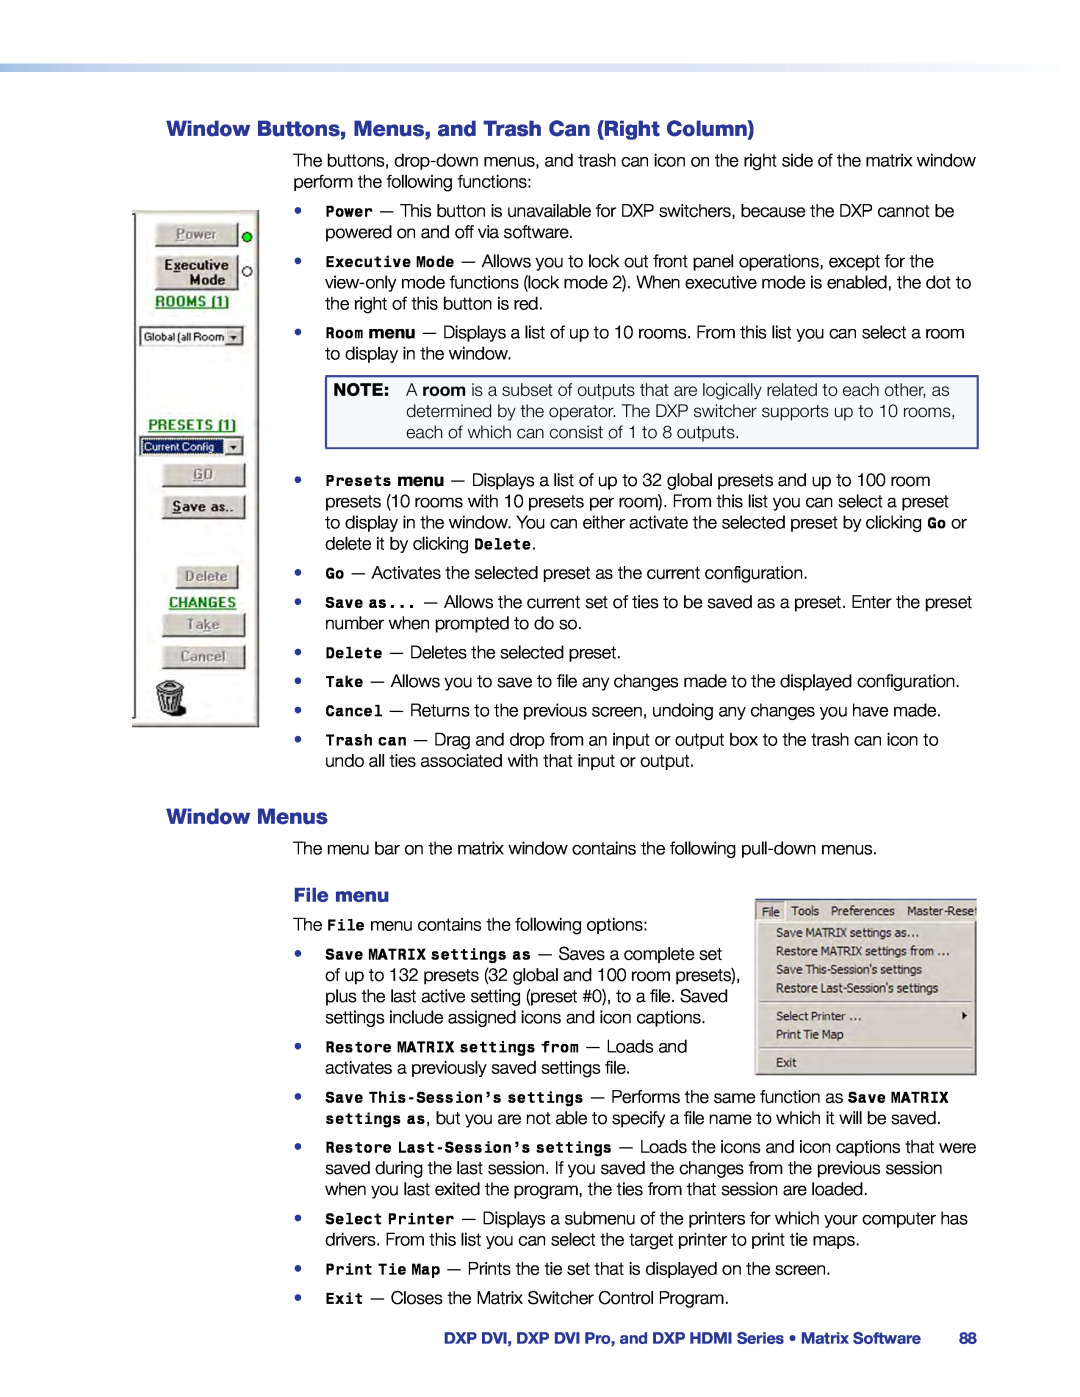 Extron electronic DXP DVI PRO manual Window Buttons, Menus, and Trash Can Right Column, Window Menus, File menu 